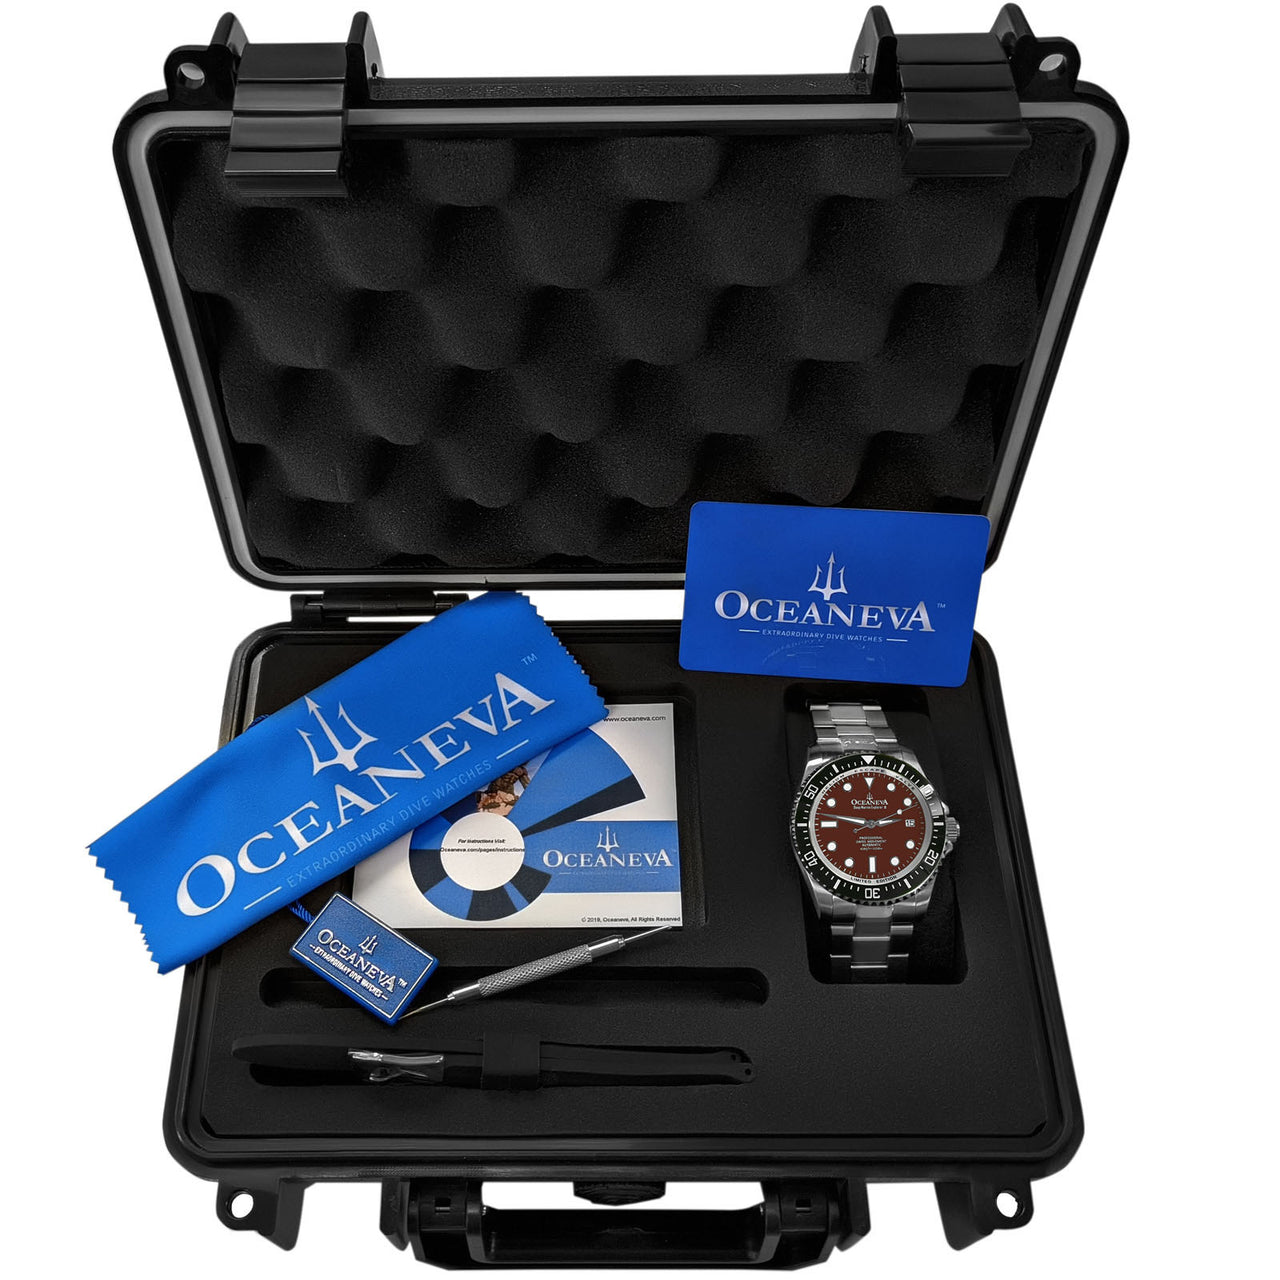 Oceaneva 1250M Dive Watch Black Bezel Brown Dial With Packaging